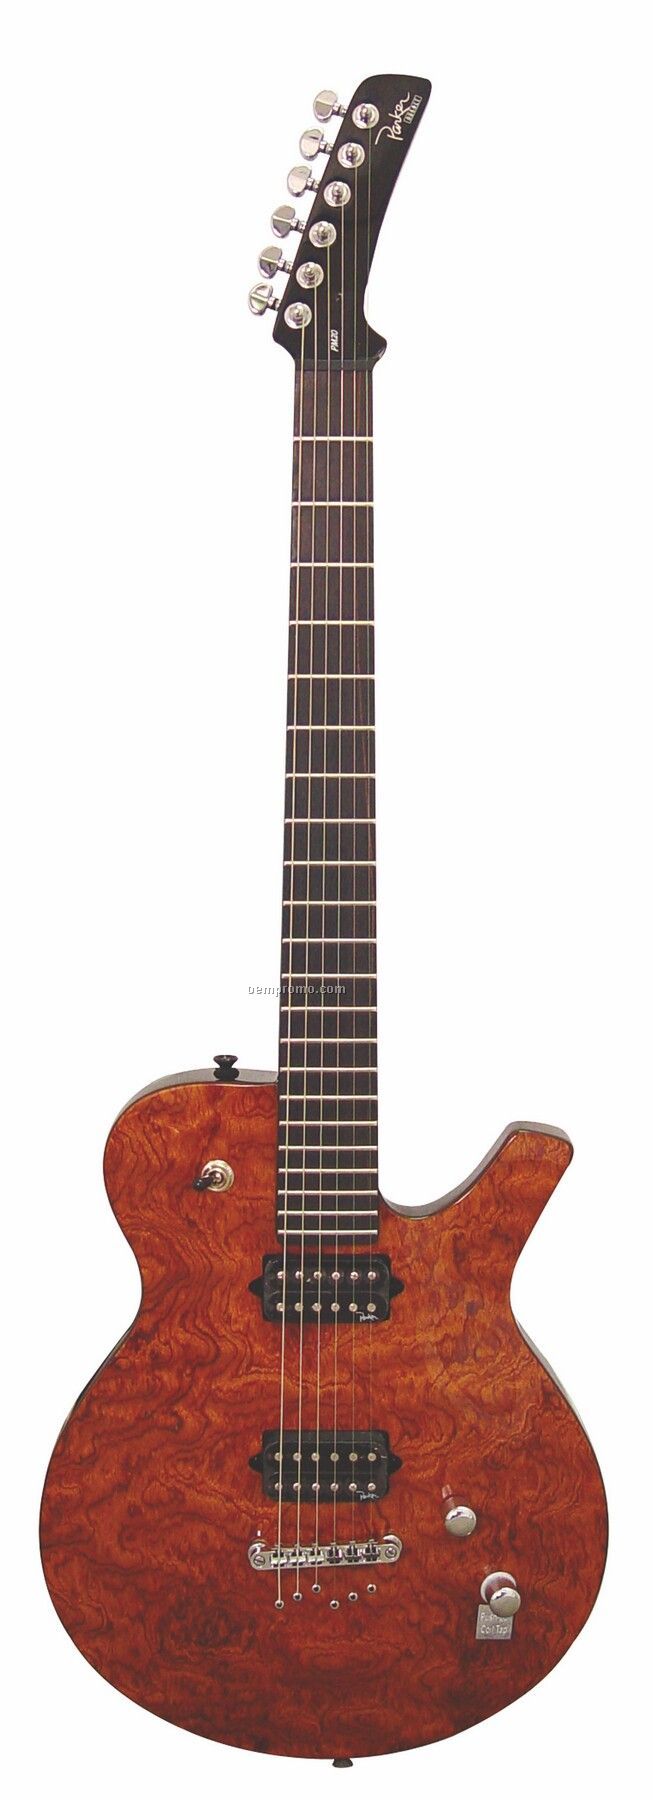 Parker PM 20 P-series Electric Guitar